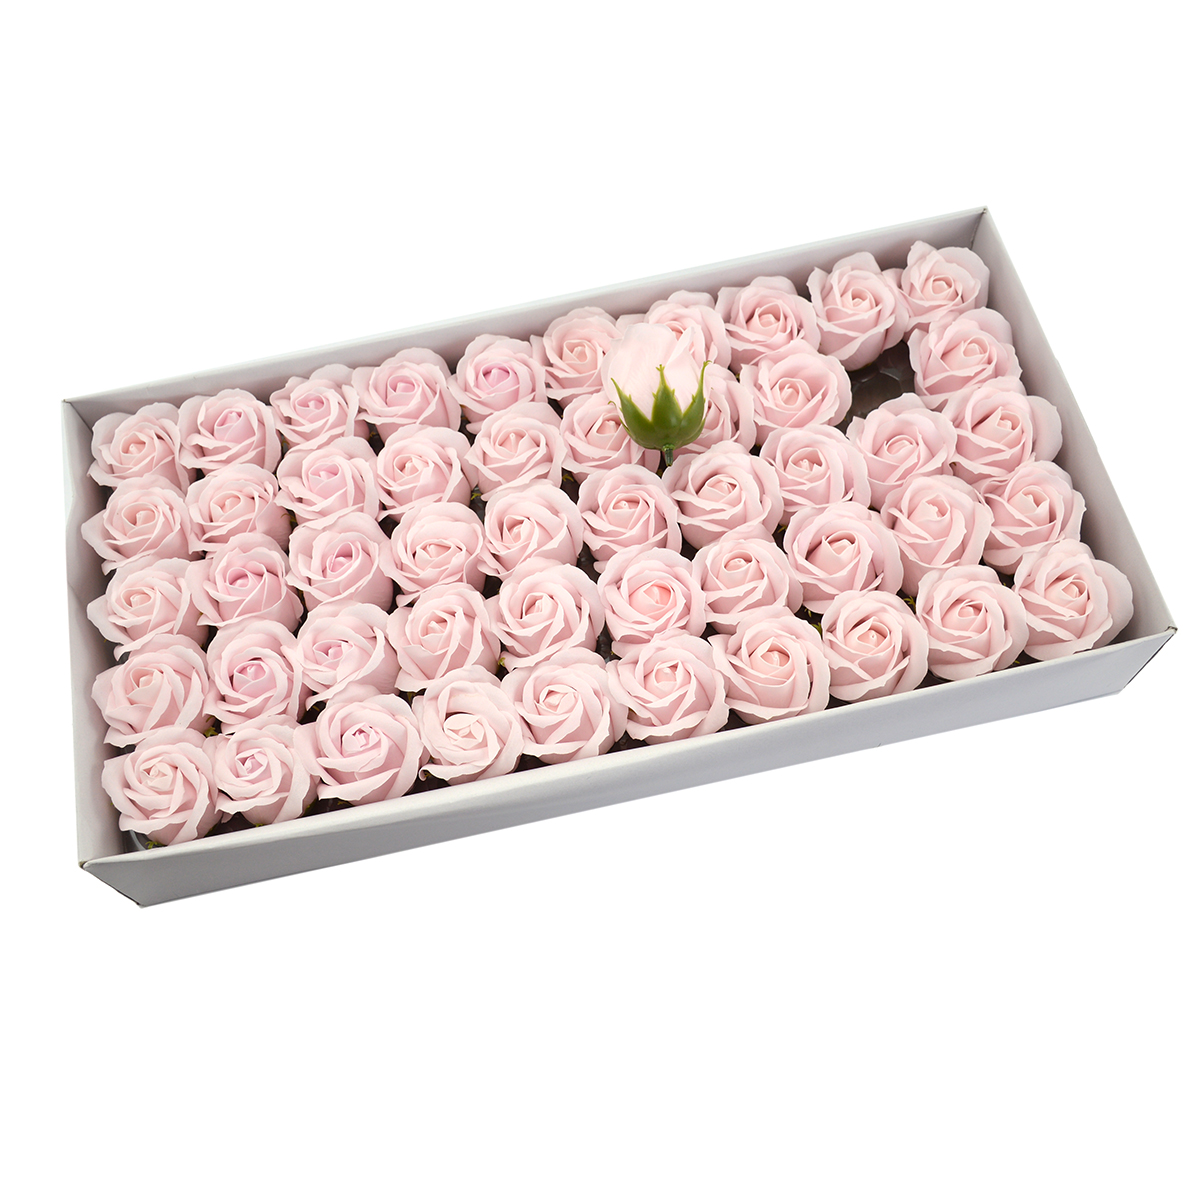 Juego de 50 rosas de jabón aromáticas, toque real, rosa pálido